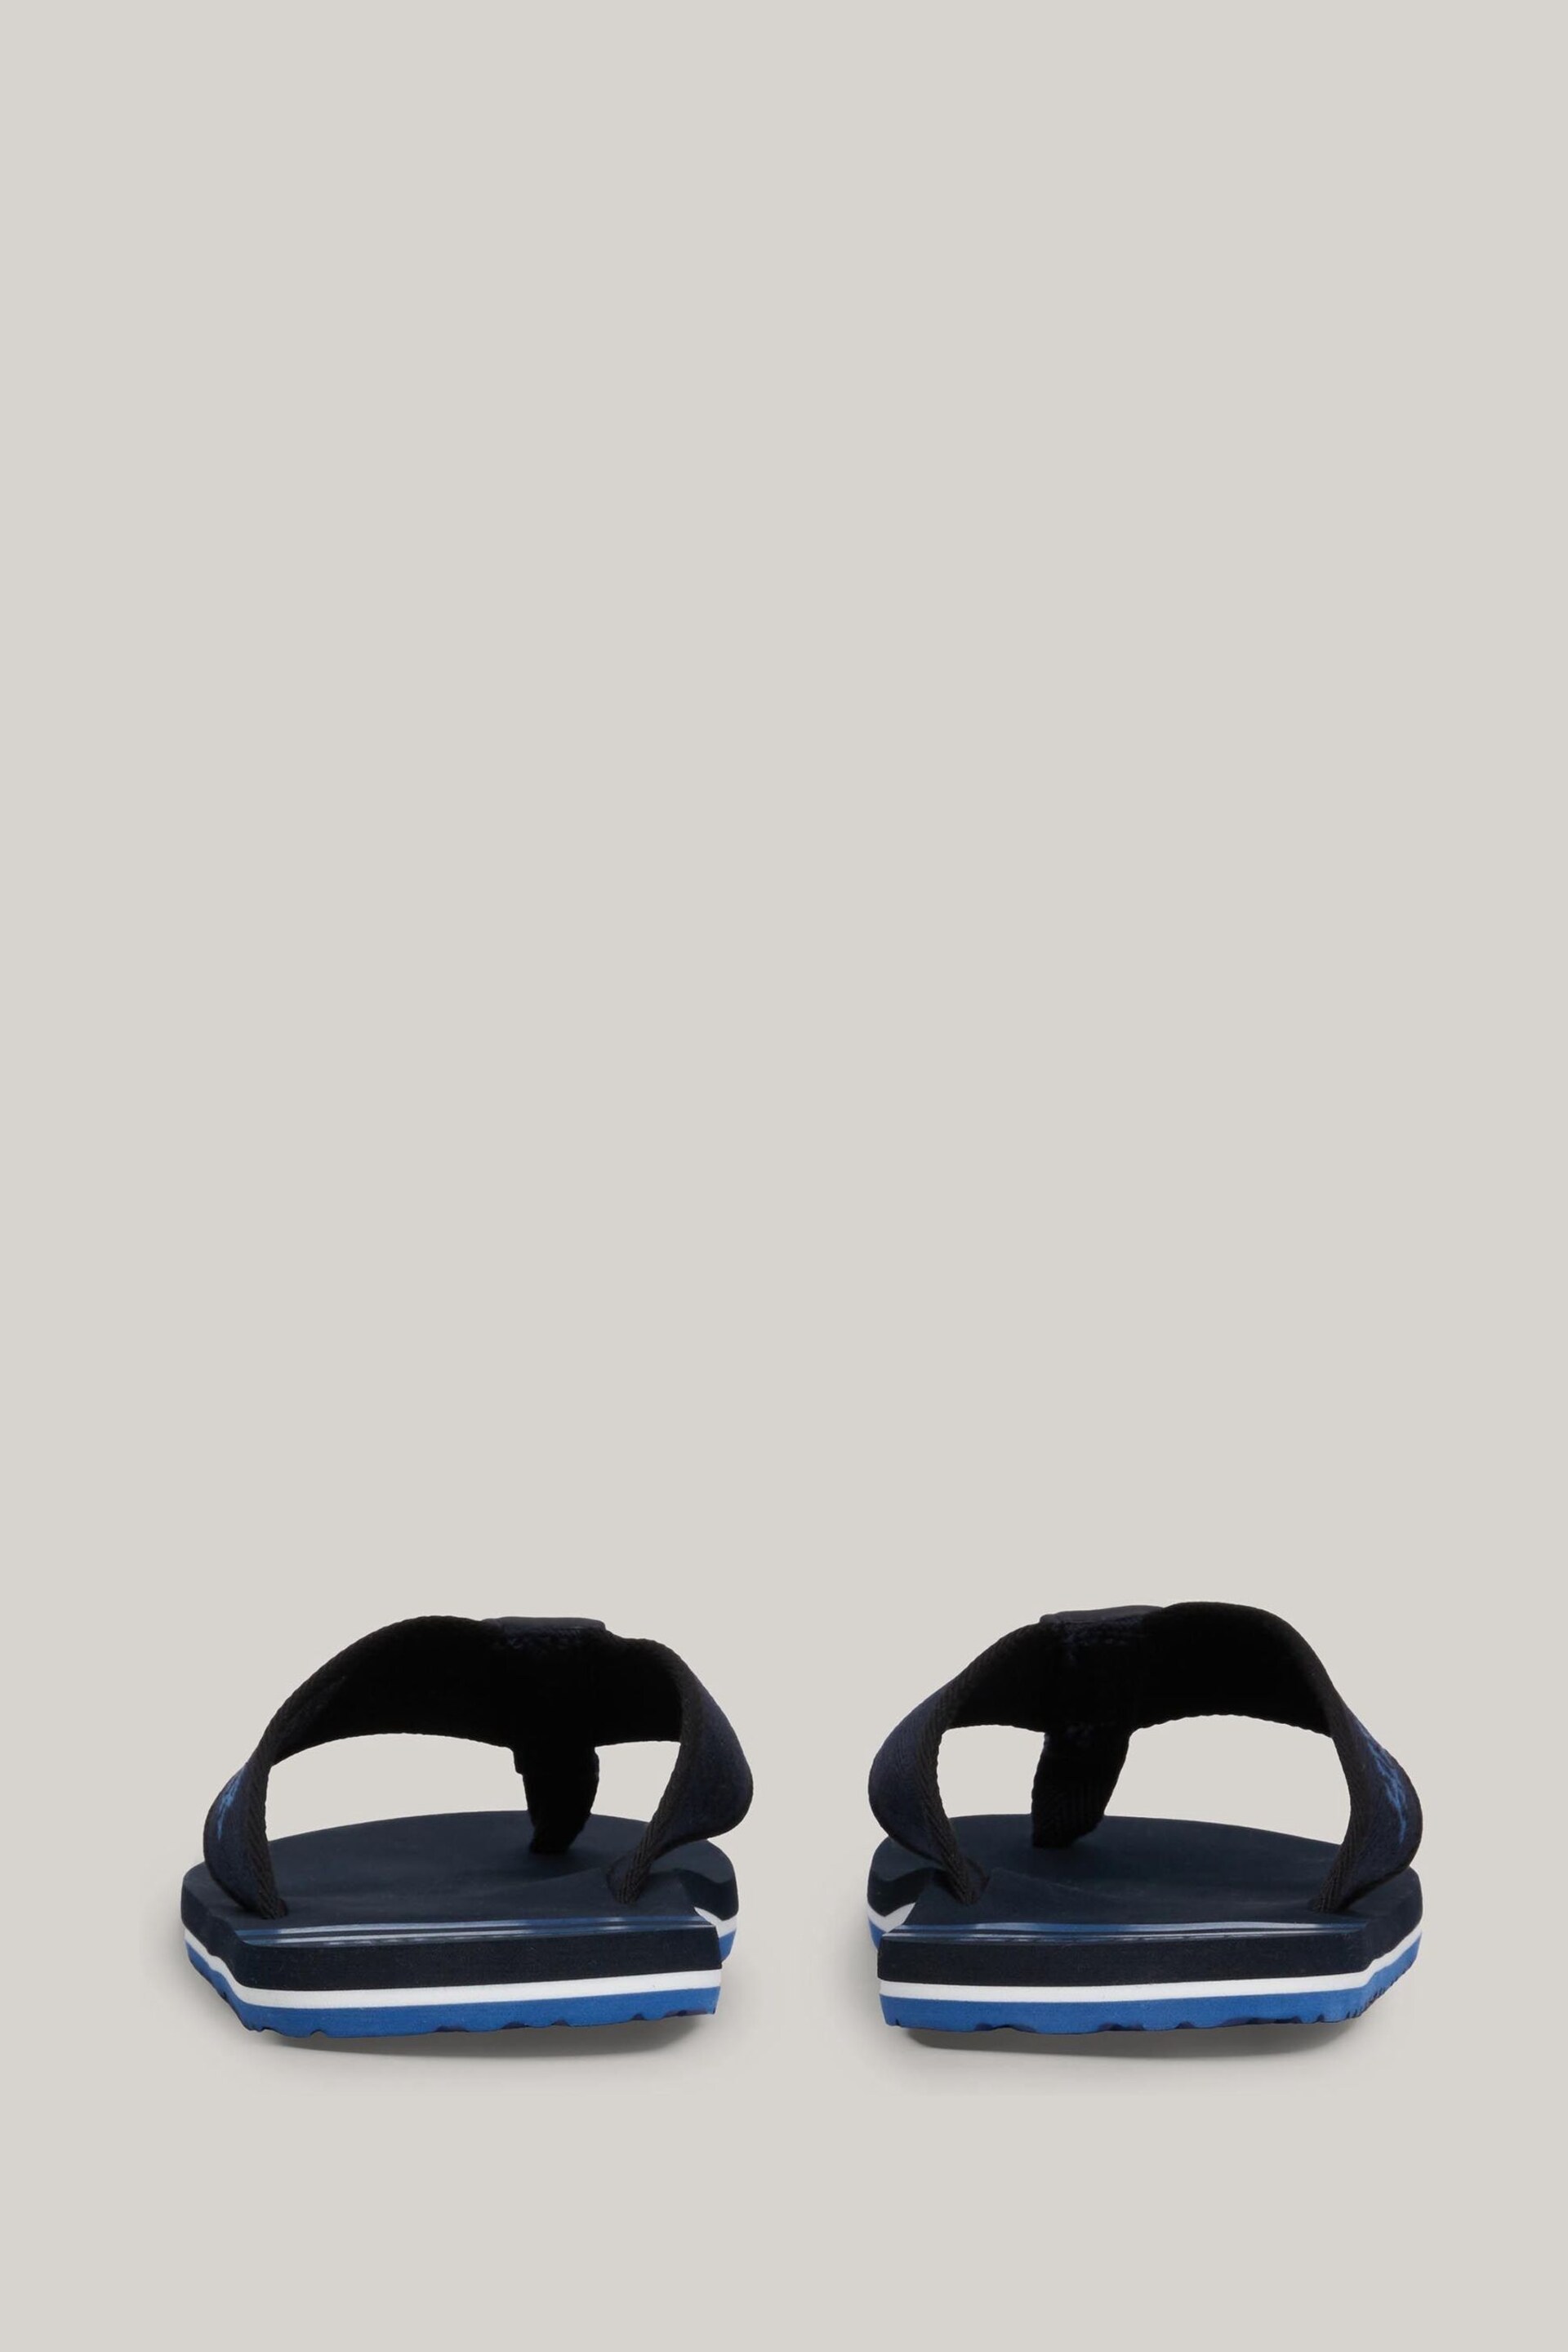 Tommy Hilfiger Blue Sporty Hilfiger Beach Sandals - Image 3 of 6